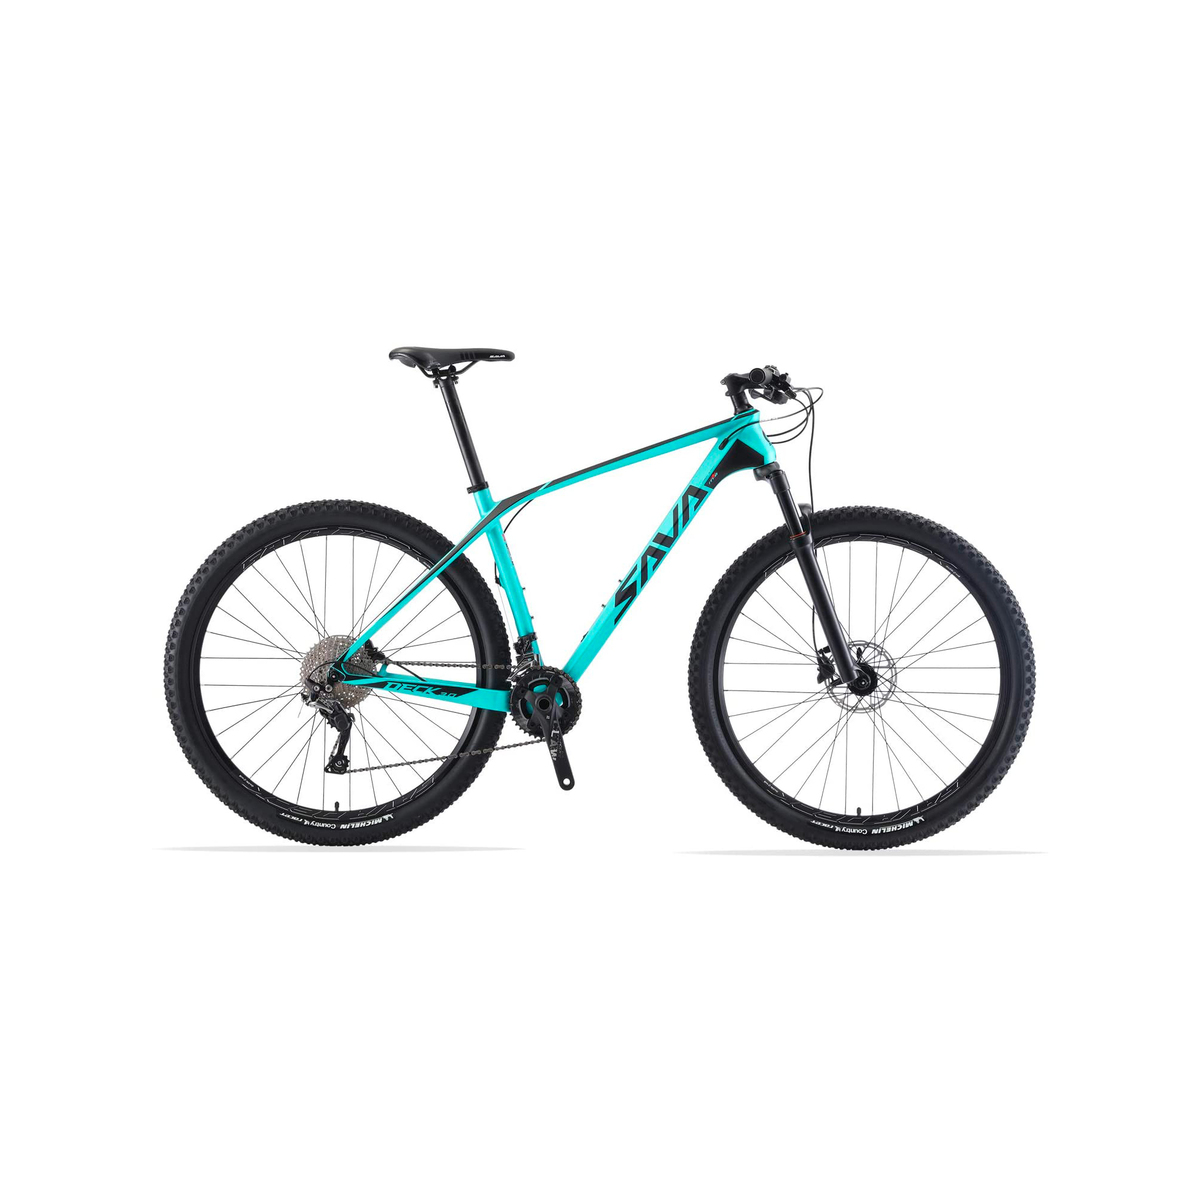 Sava Carbon Mountain Bike Tail MTB Bicycle 6.0 29" Blue & Black